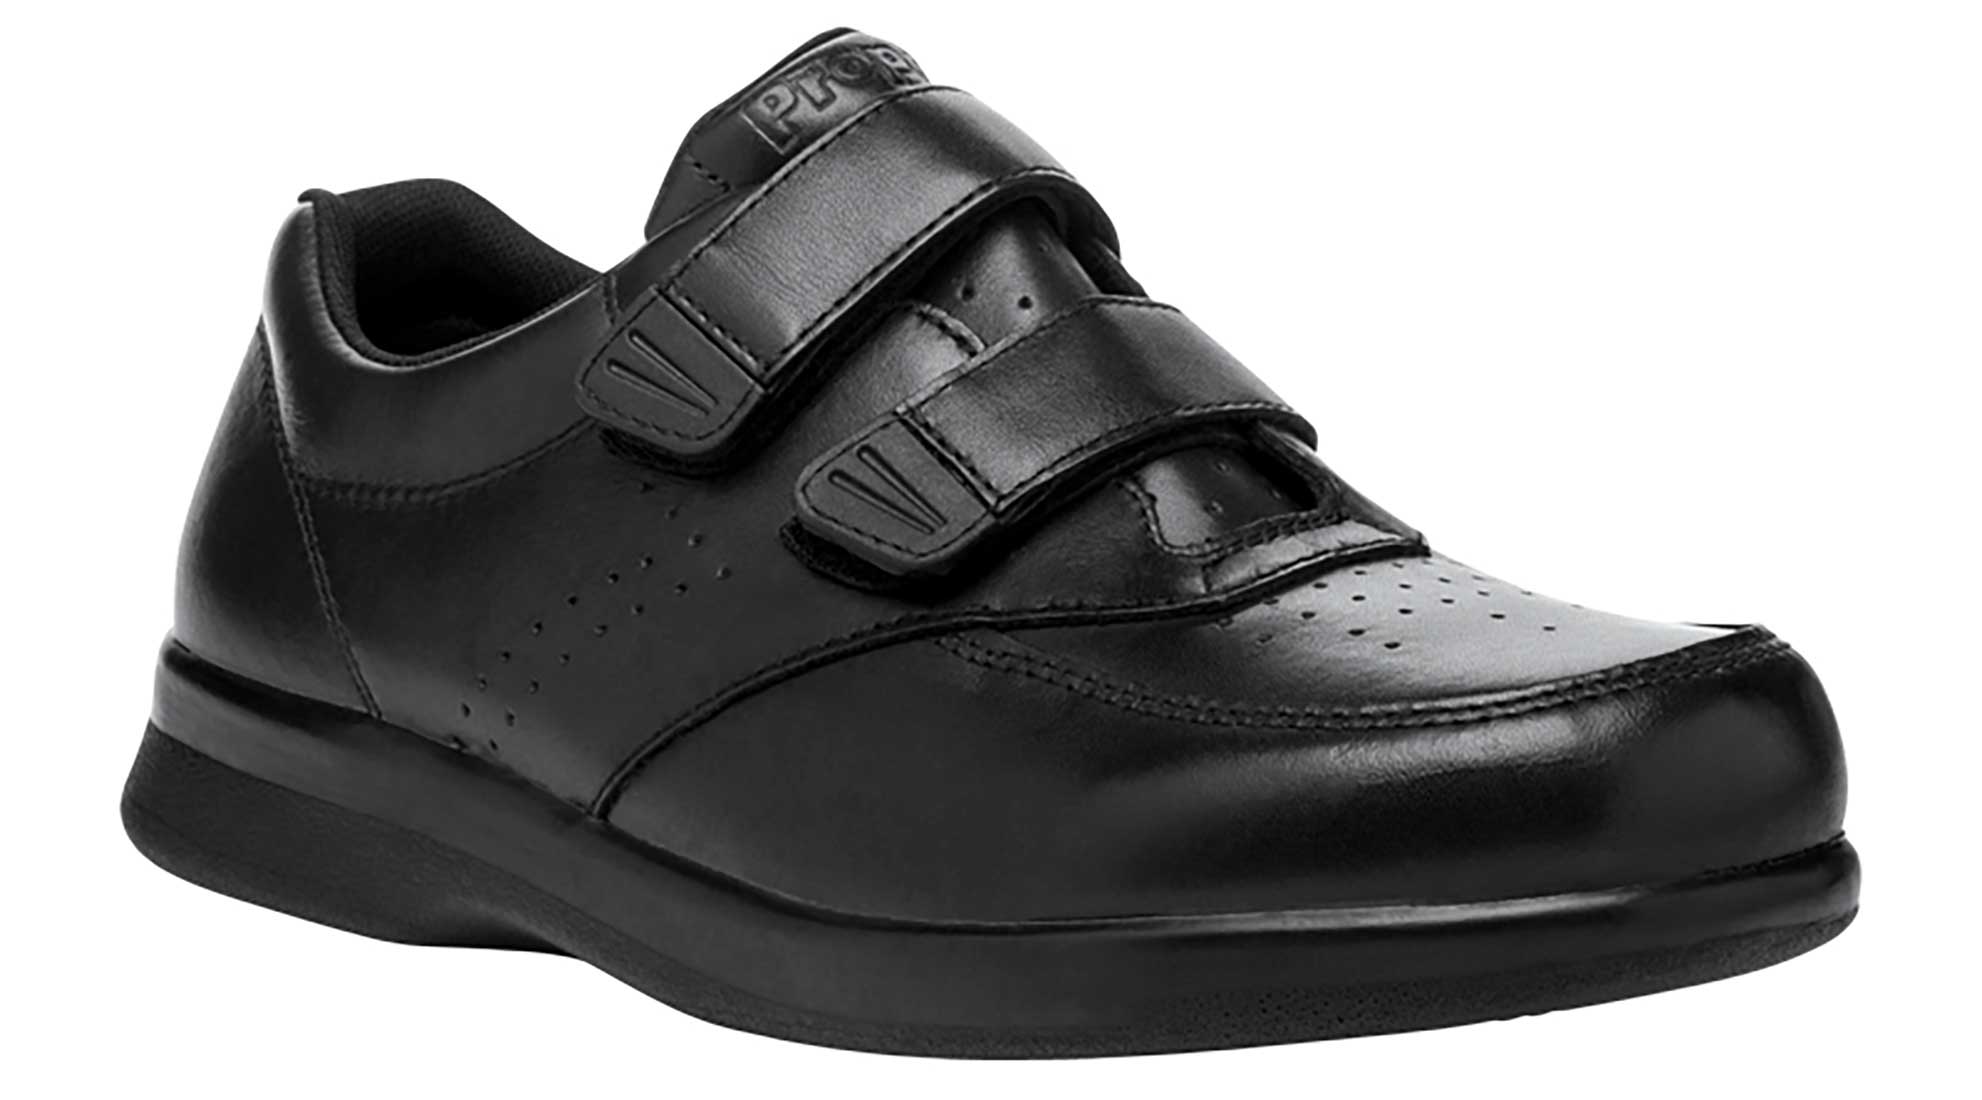 Propet Vista Walker Strap Athletic M3915 Men's Casual, Comfort, Diabetic Shoe - Extra Depth For Orthotics